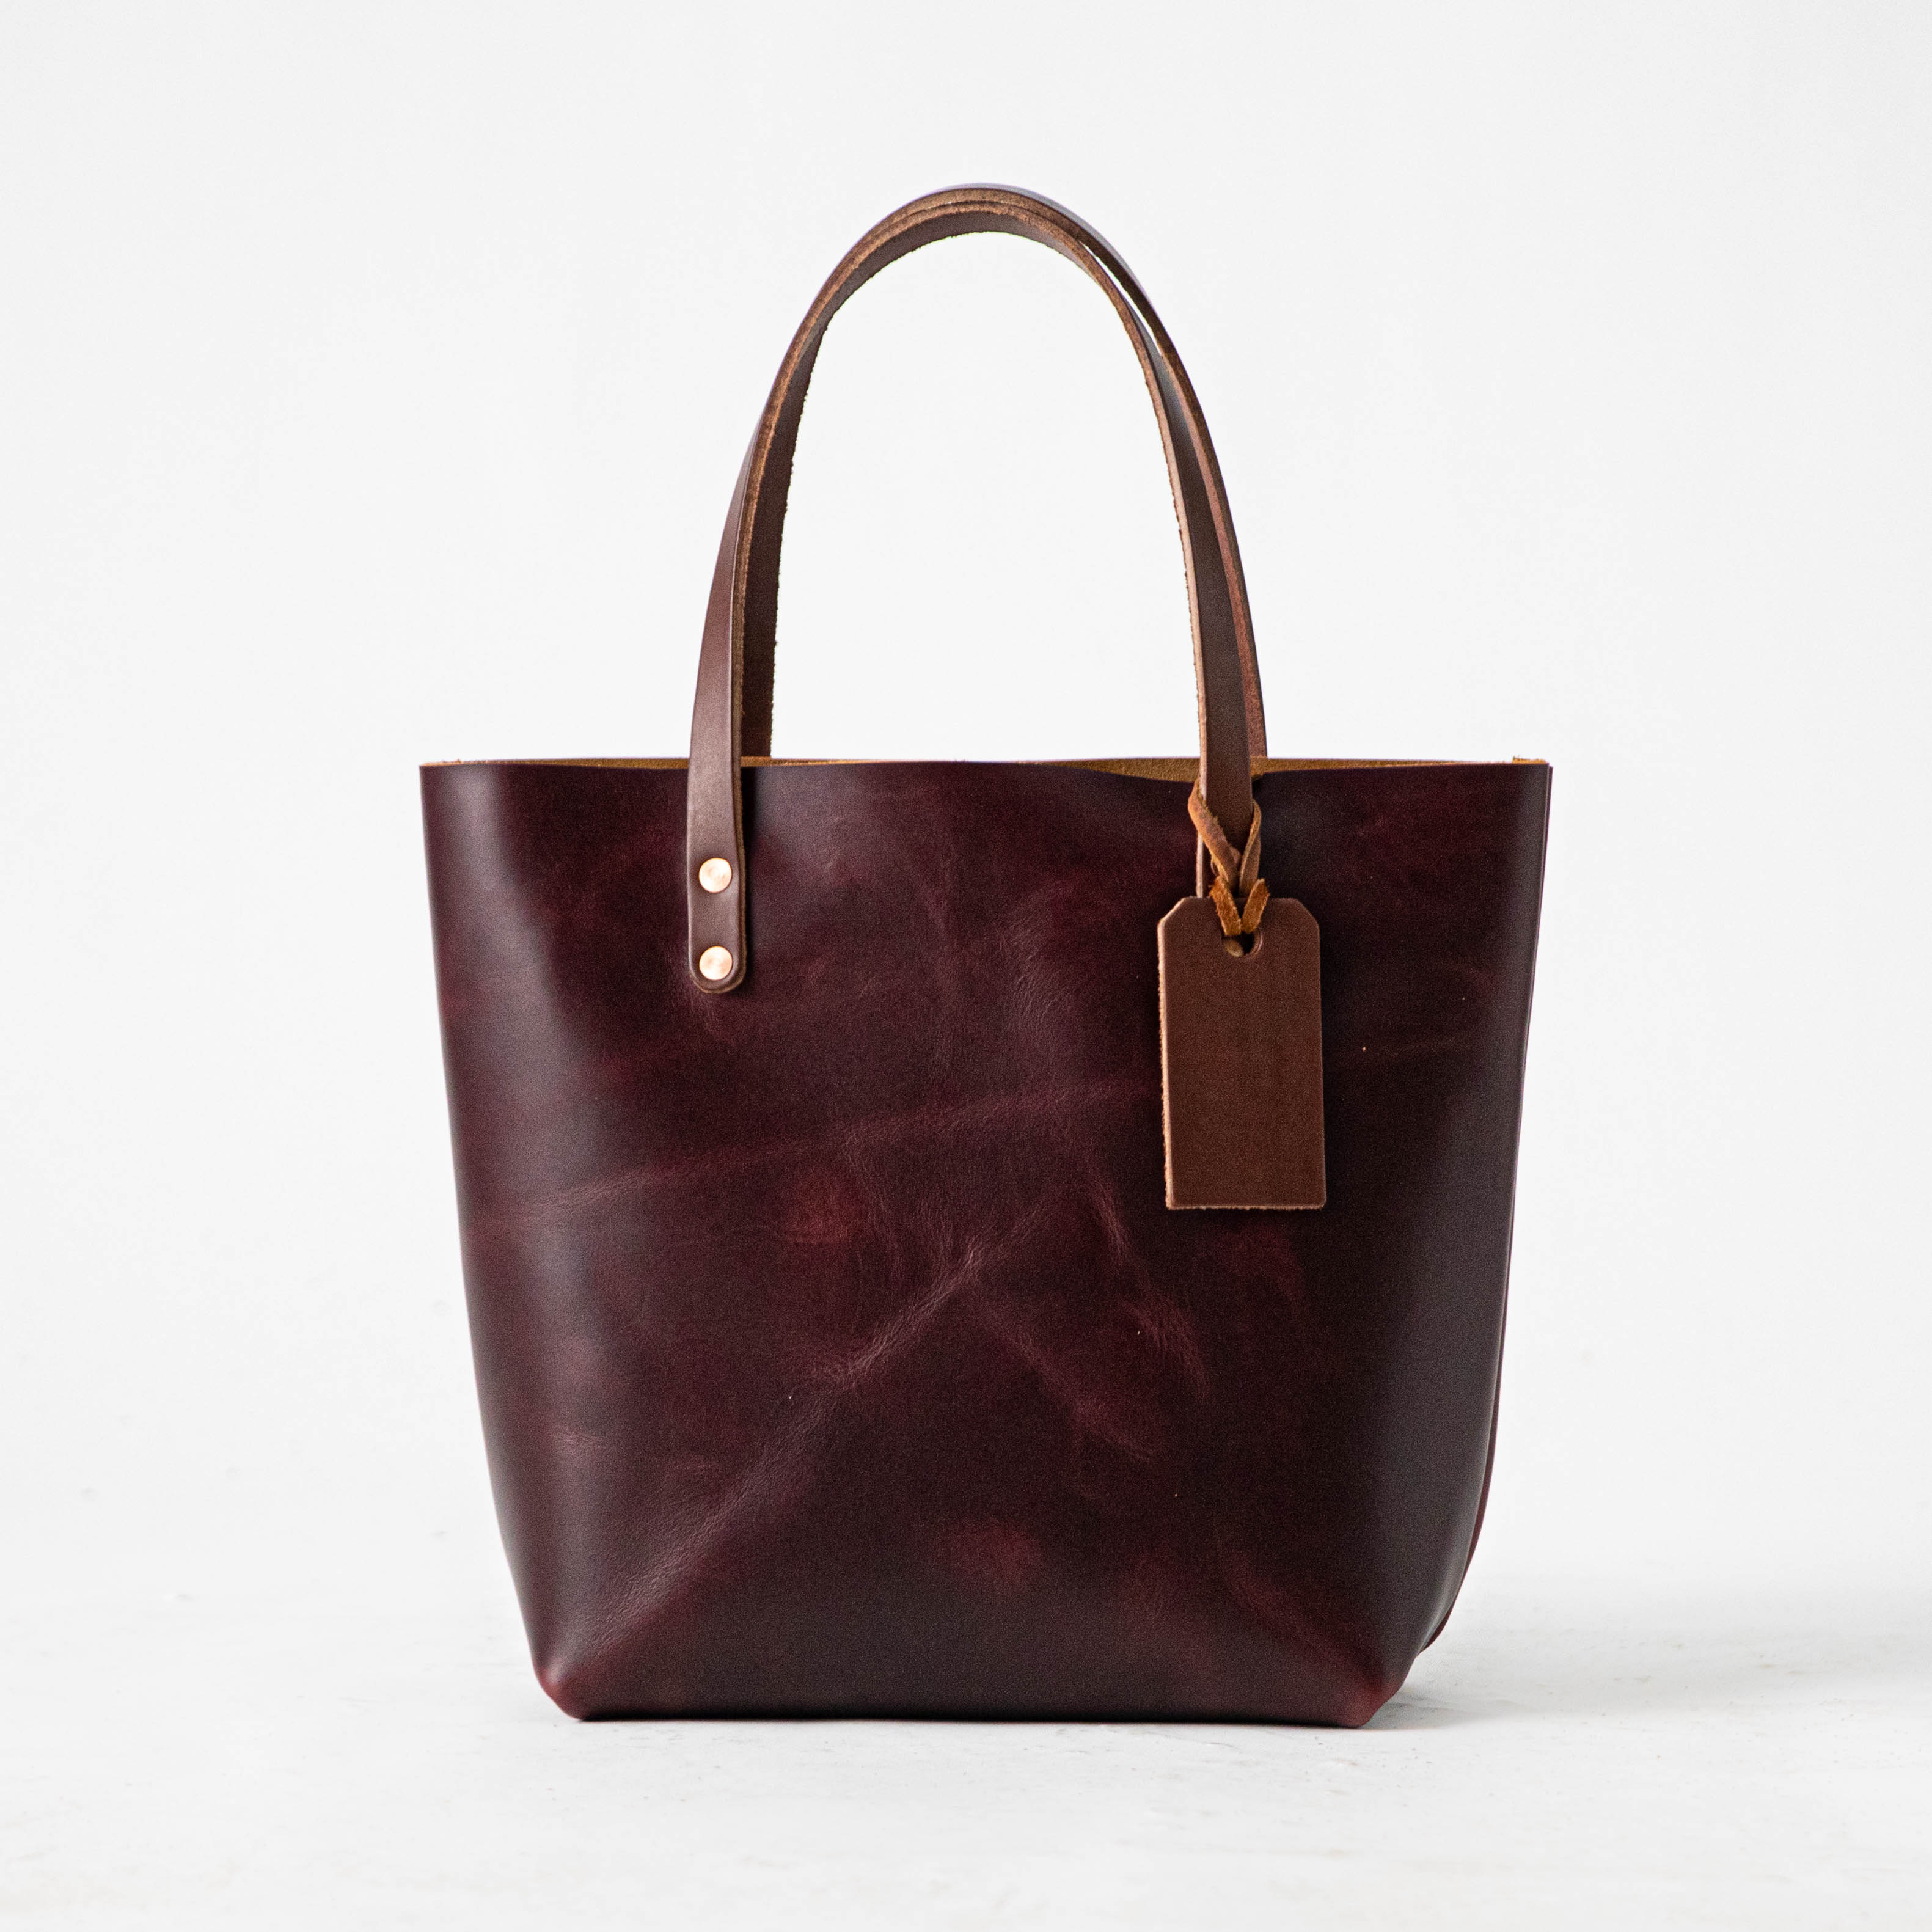 Buy Burgundy Tote Bag with Scarf Online - Label Ritu Kumar International  Store View